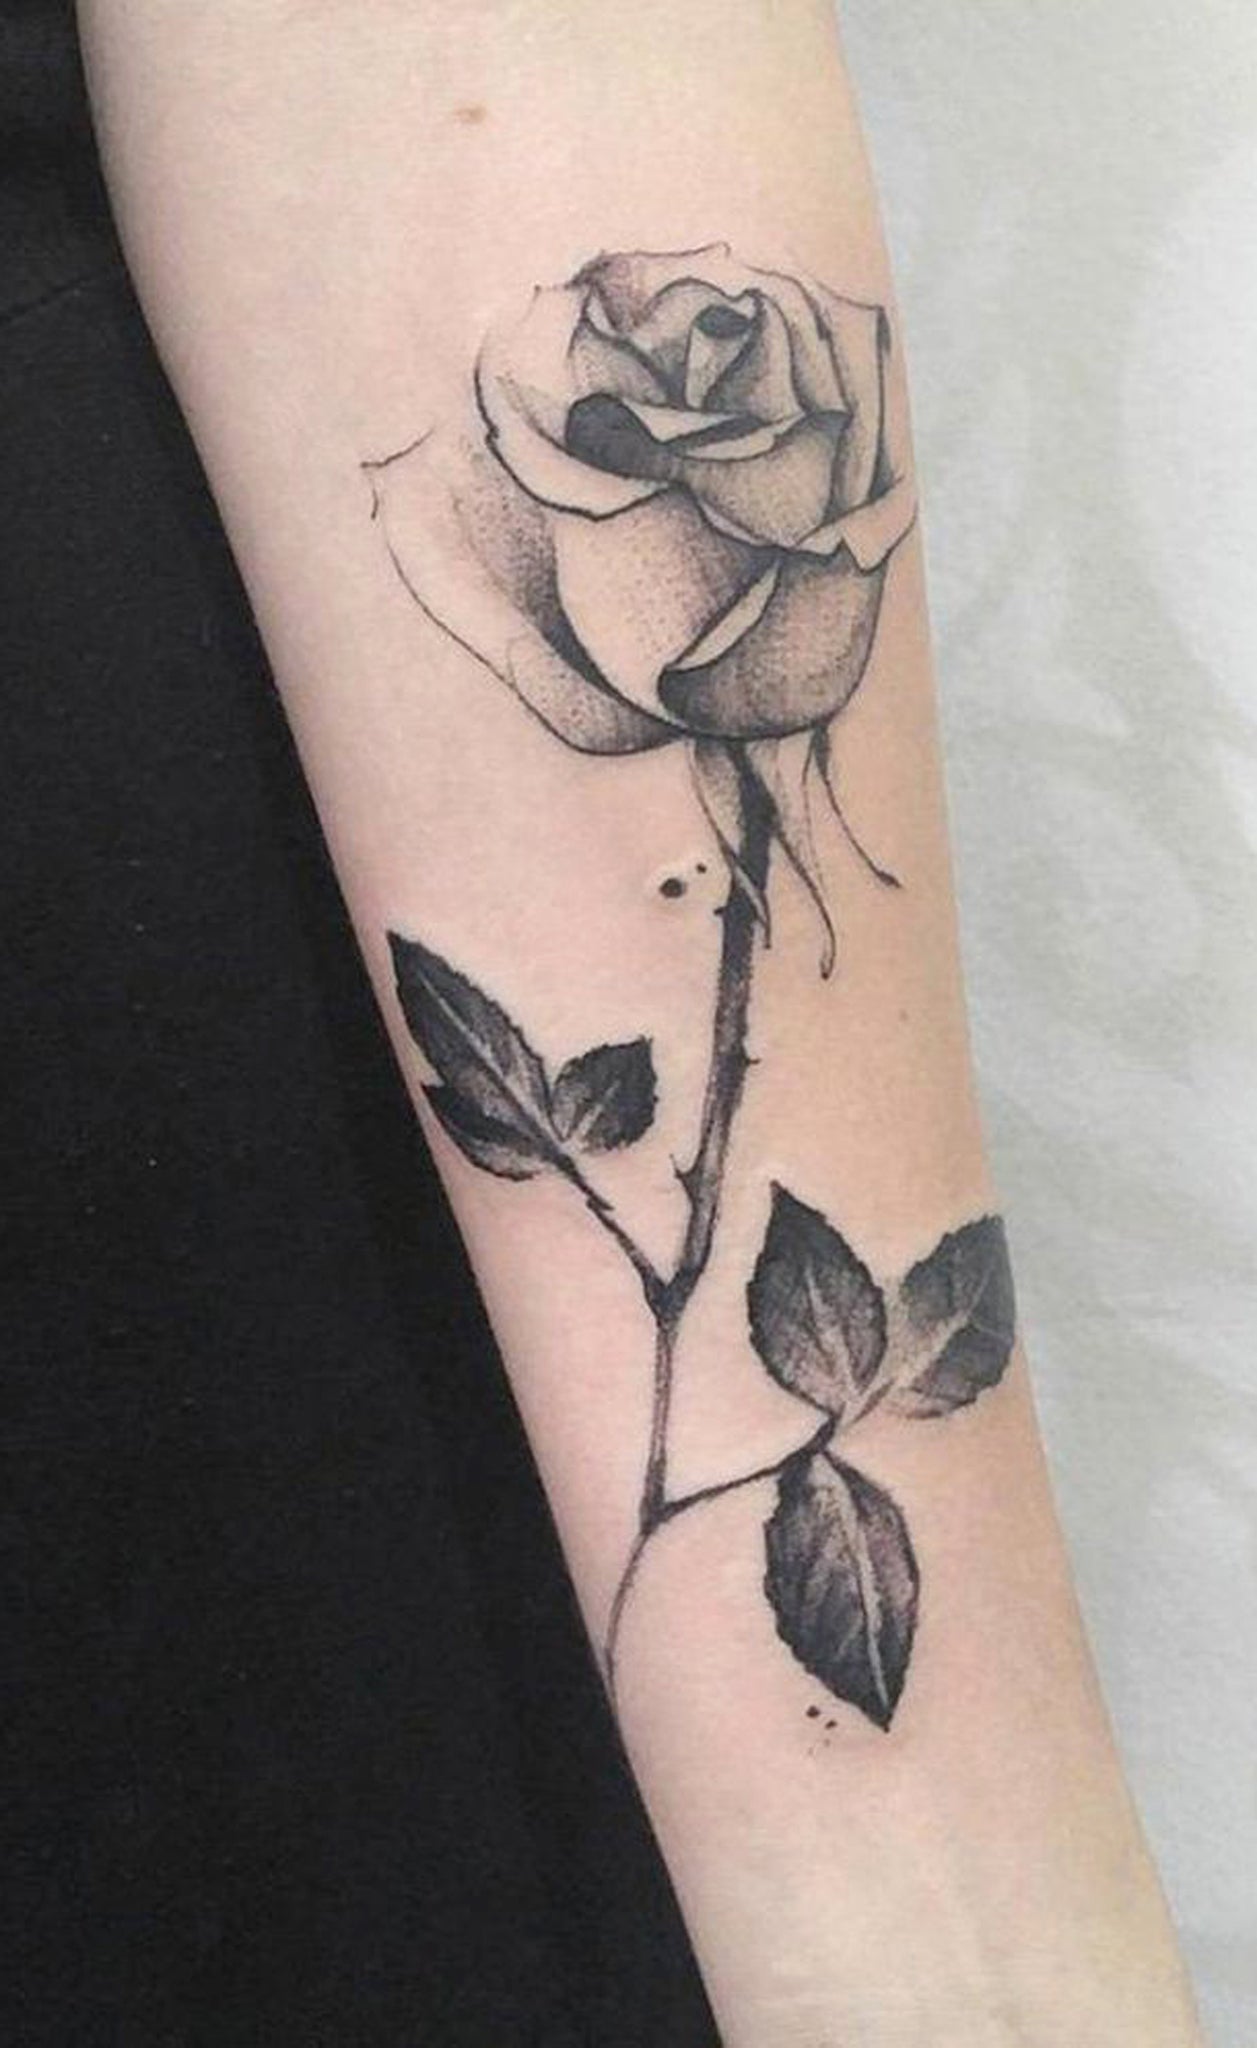 Realistic Single Rose Forearm Placement Tattoo Ideas - Simple Black Flower Arm Sleeve Tat -  ideas de tatuaje de brazo rosa para mujeres - www.MyBodiArt.com